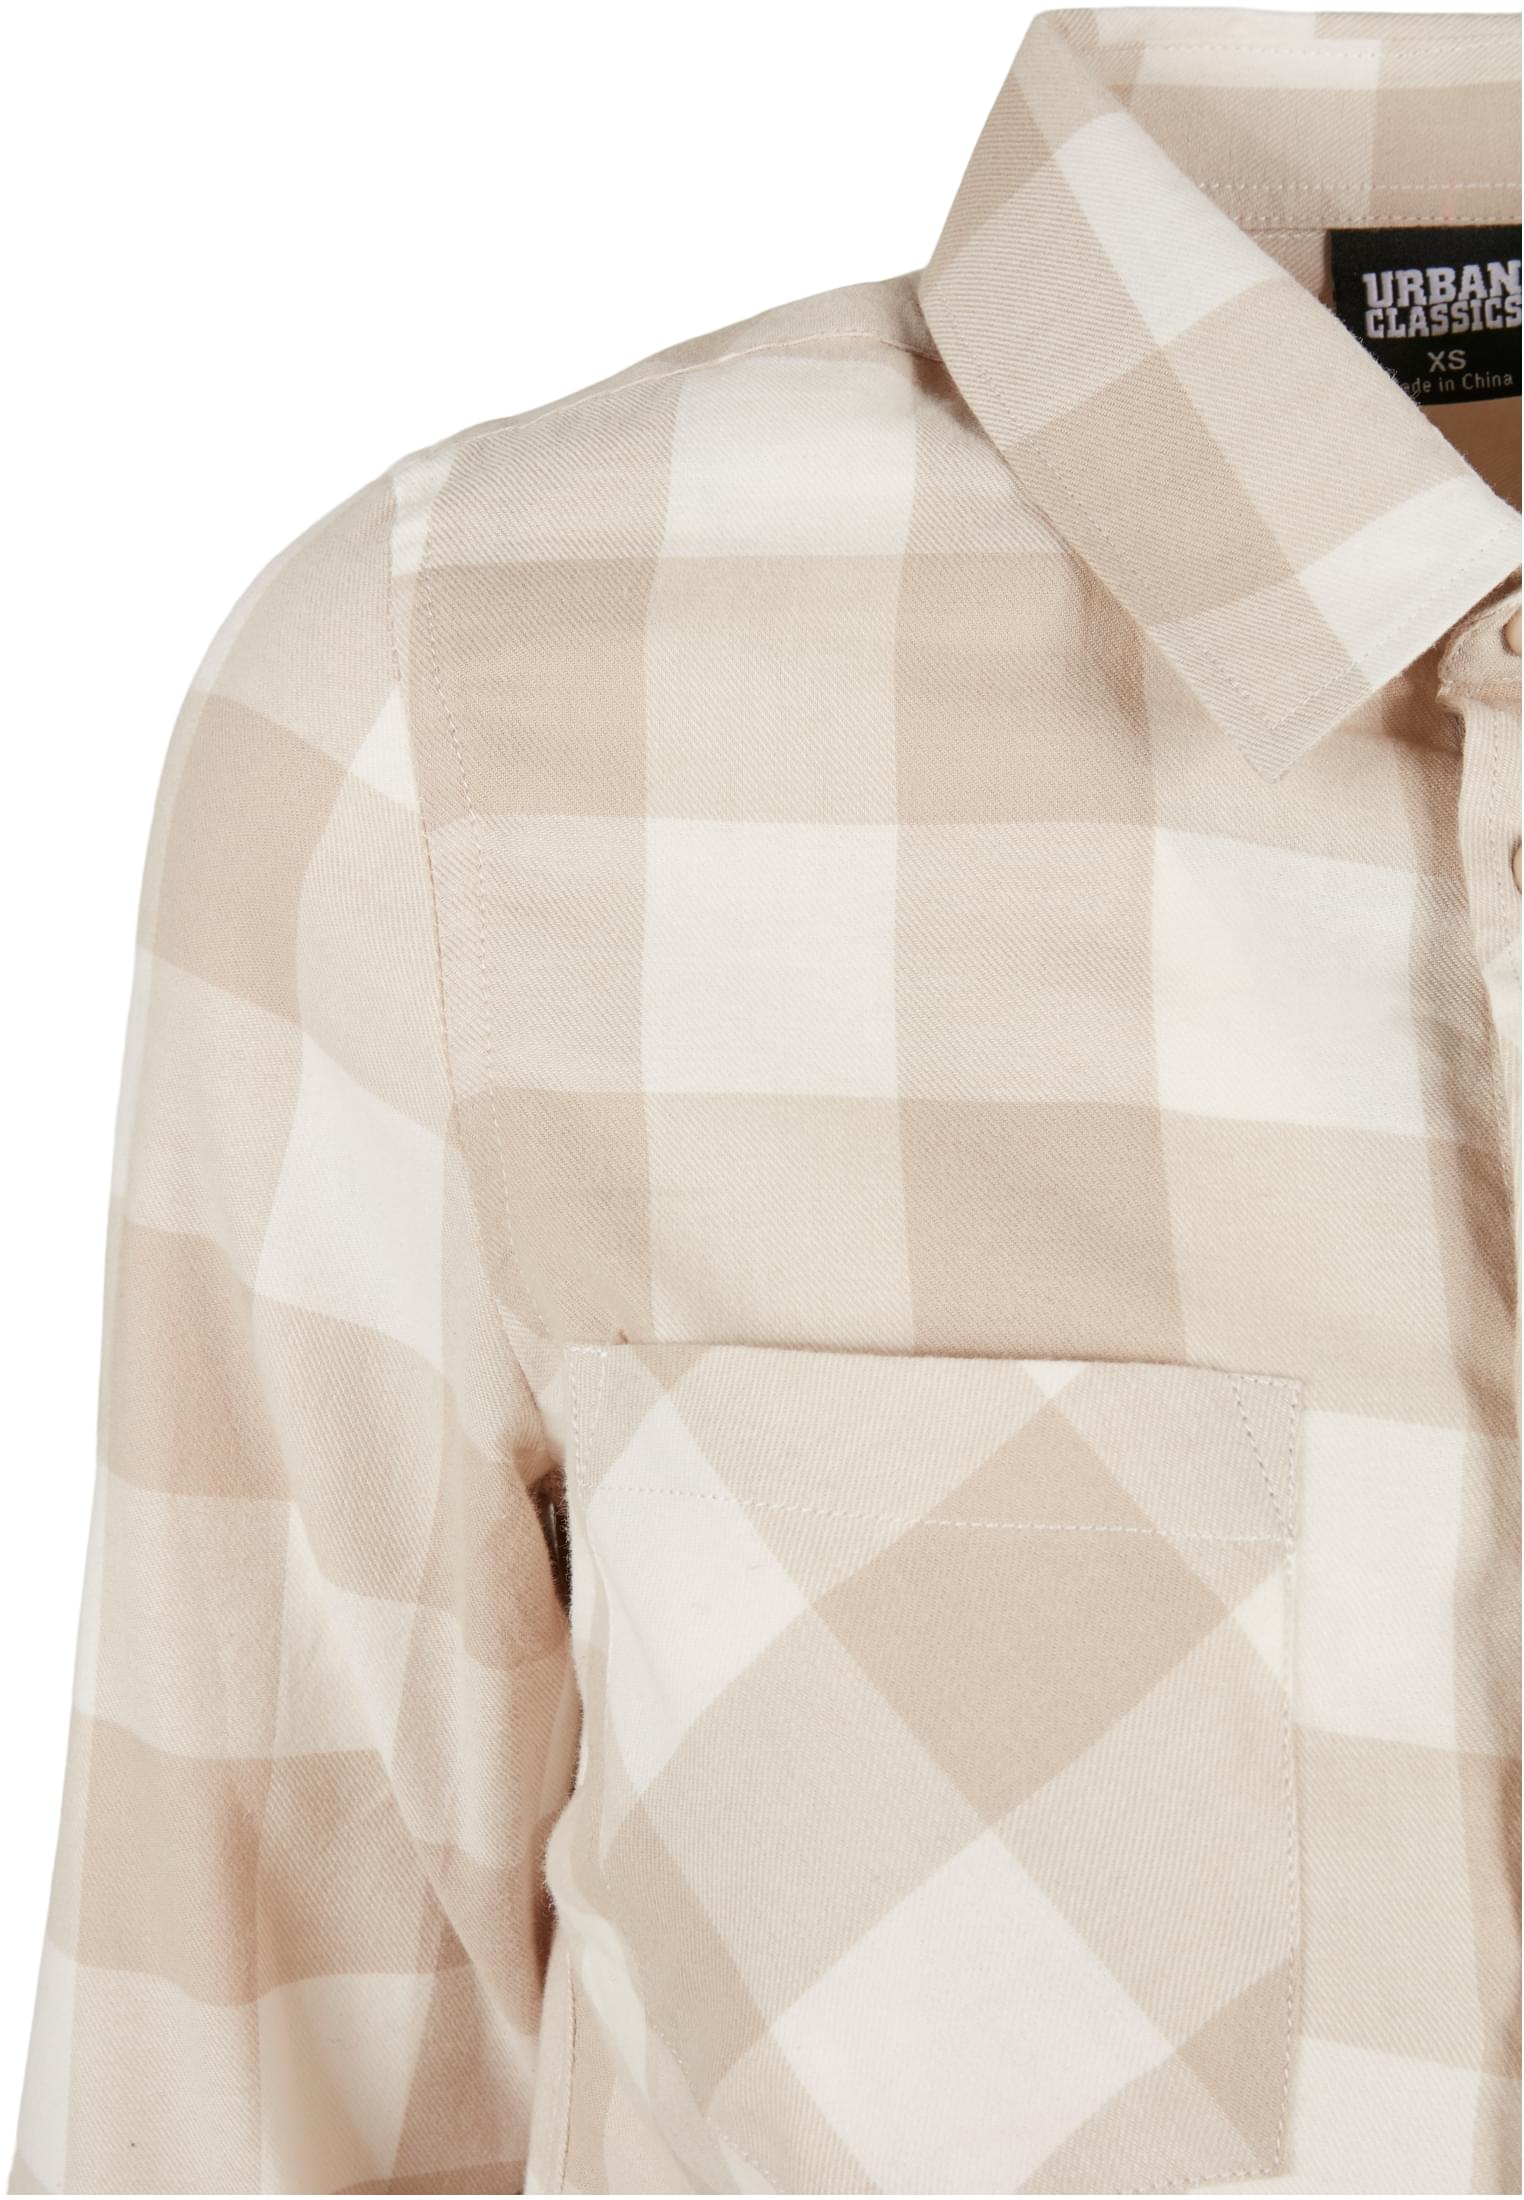 Damen Ladies Turnup Checked Flanell Shirt in Farbe whitesand/lighttaupe